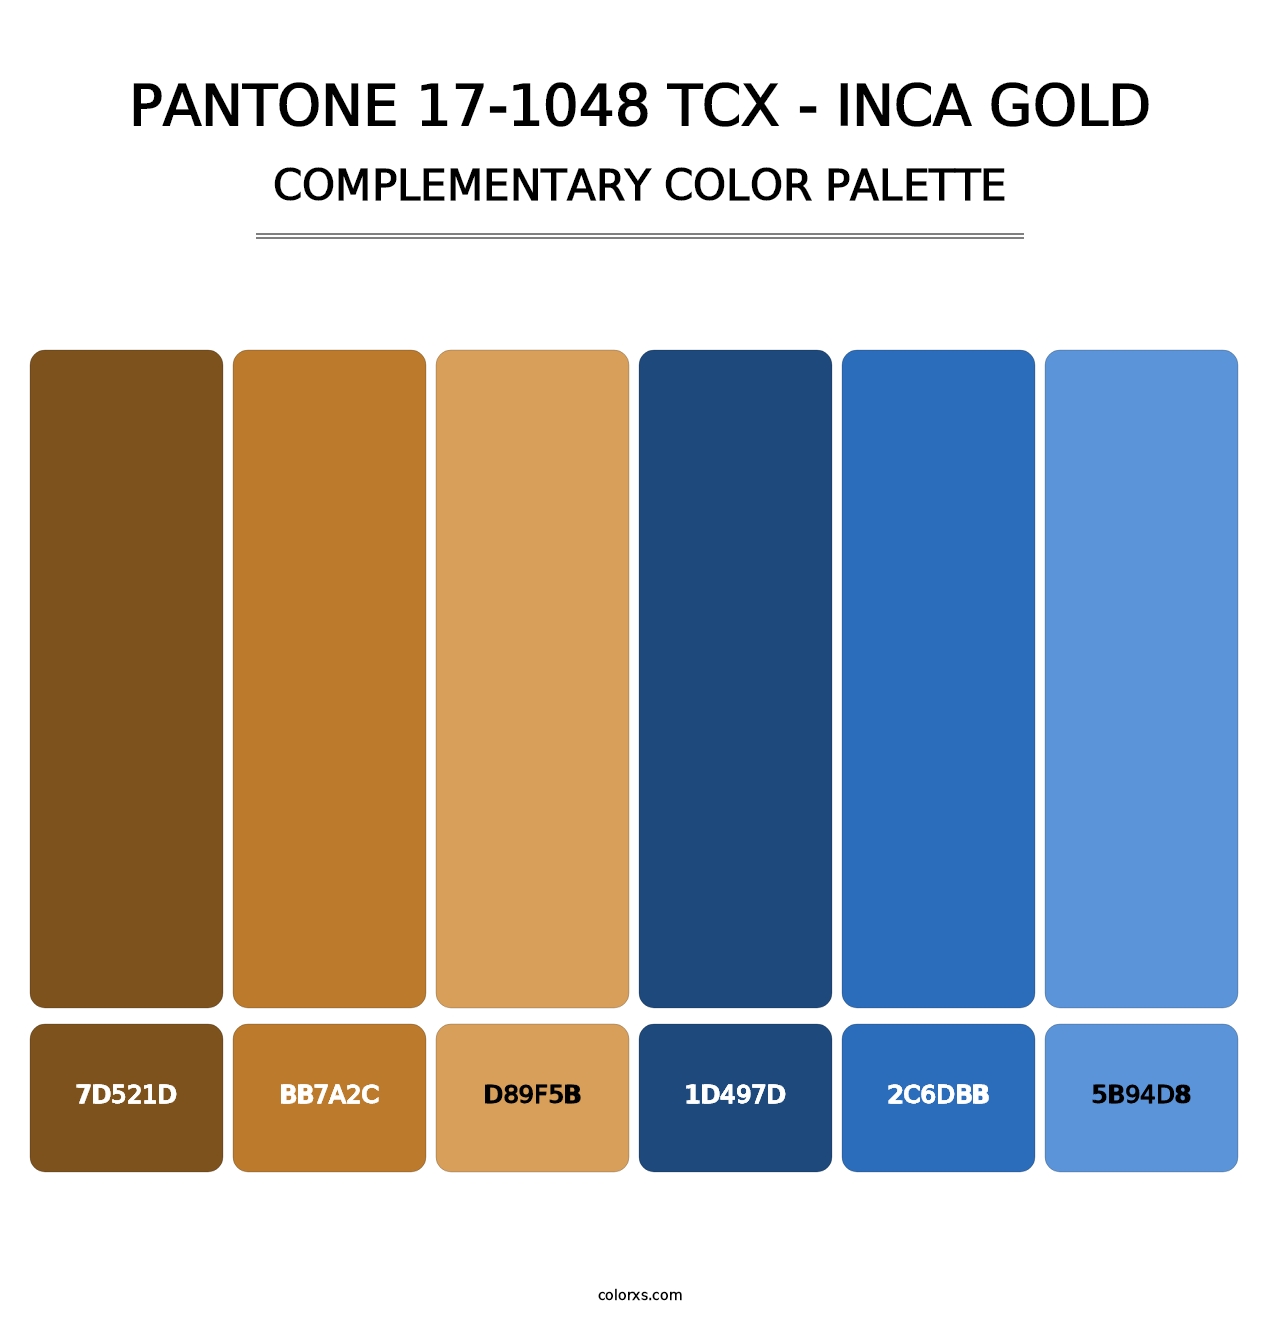 PANTONE 17-1048 TCX - Inca Gold - Complementary Color Palette